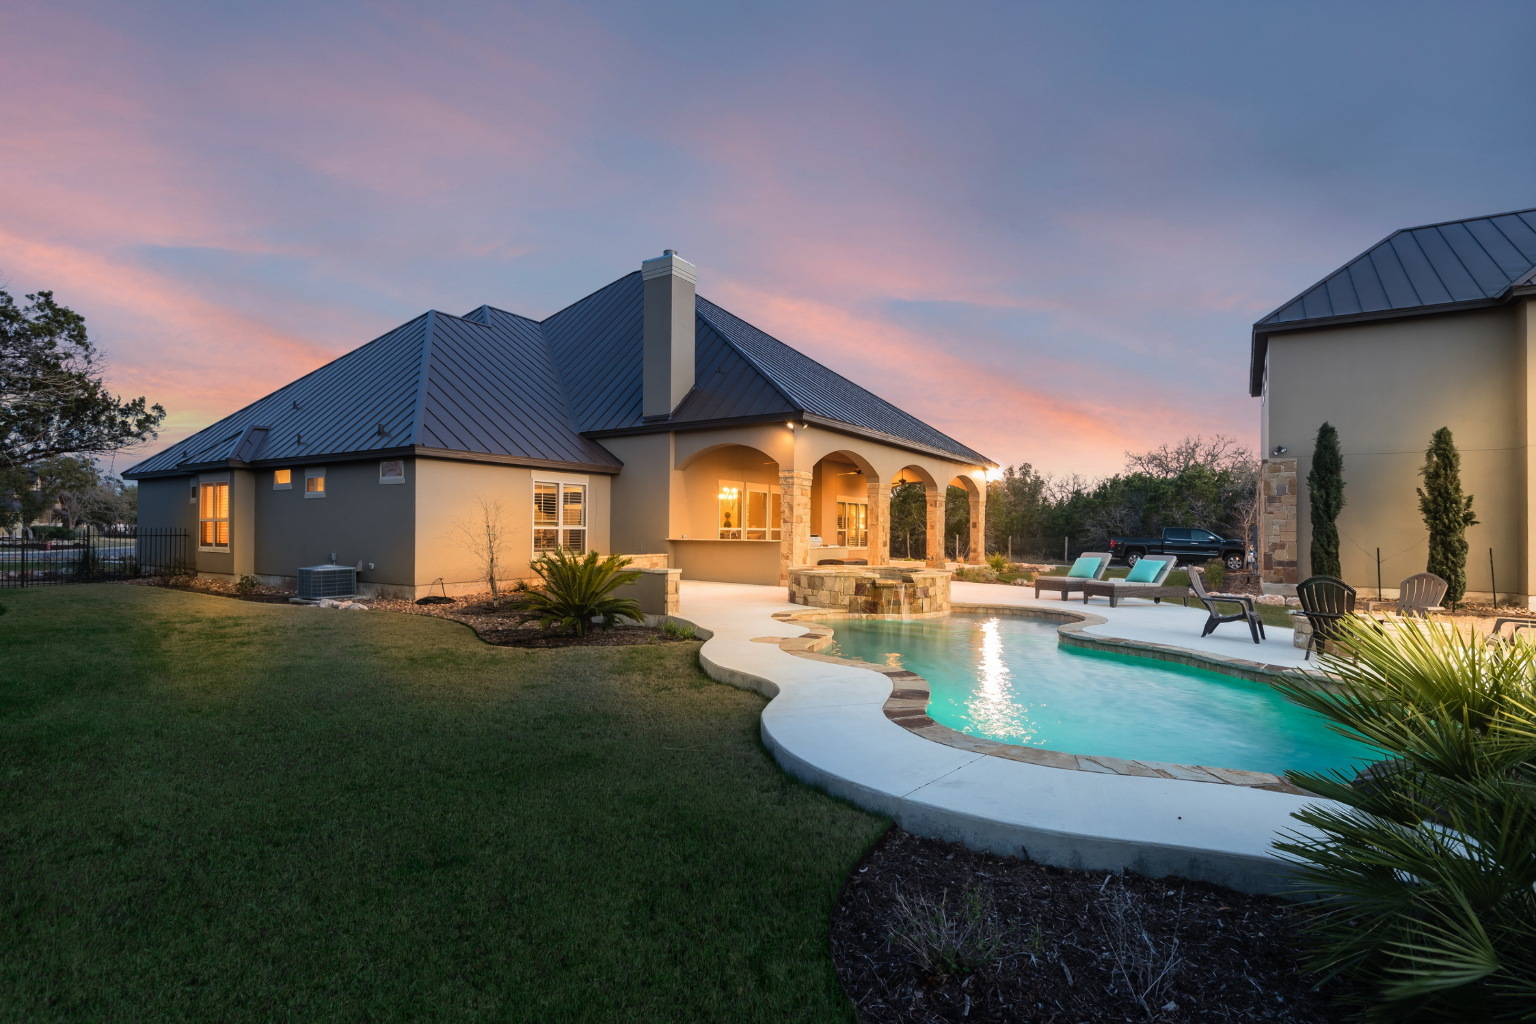 Luxury Living in Boerne, TX - Boerne Real Estate For Sale